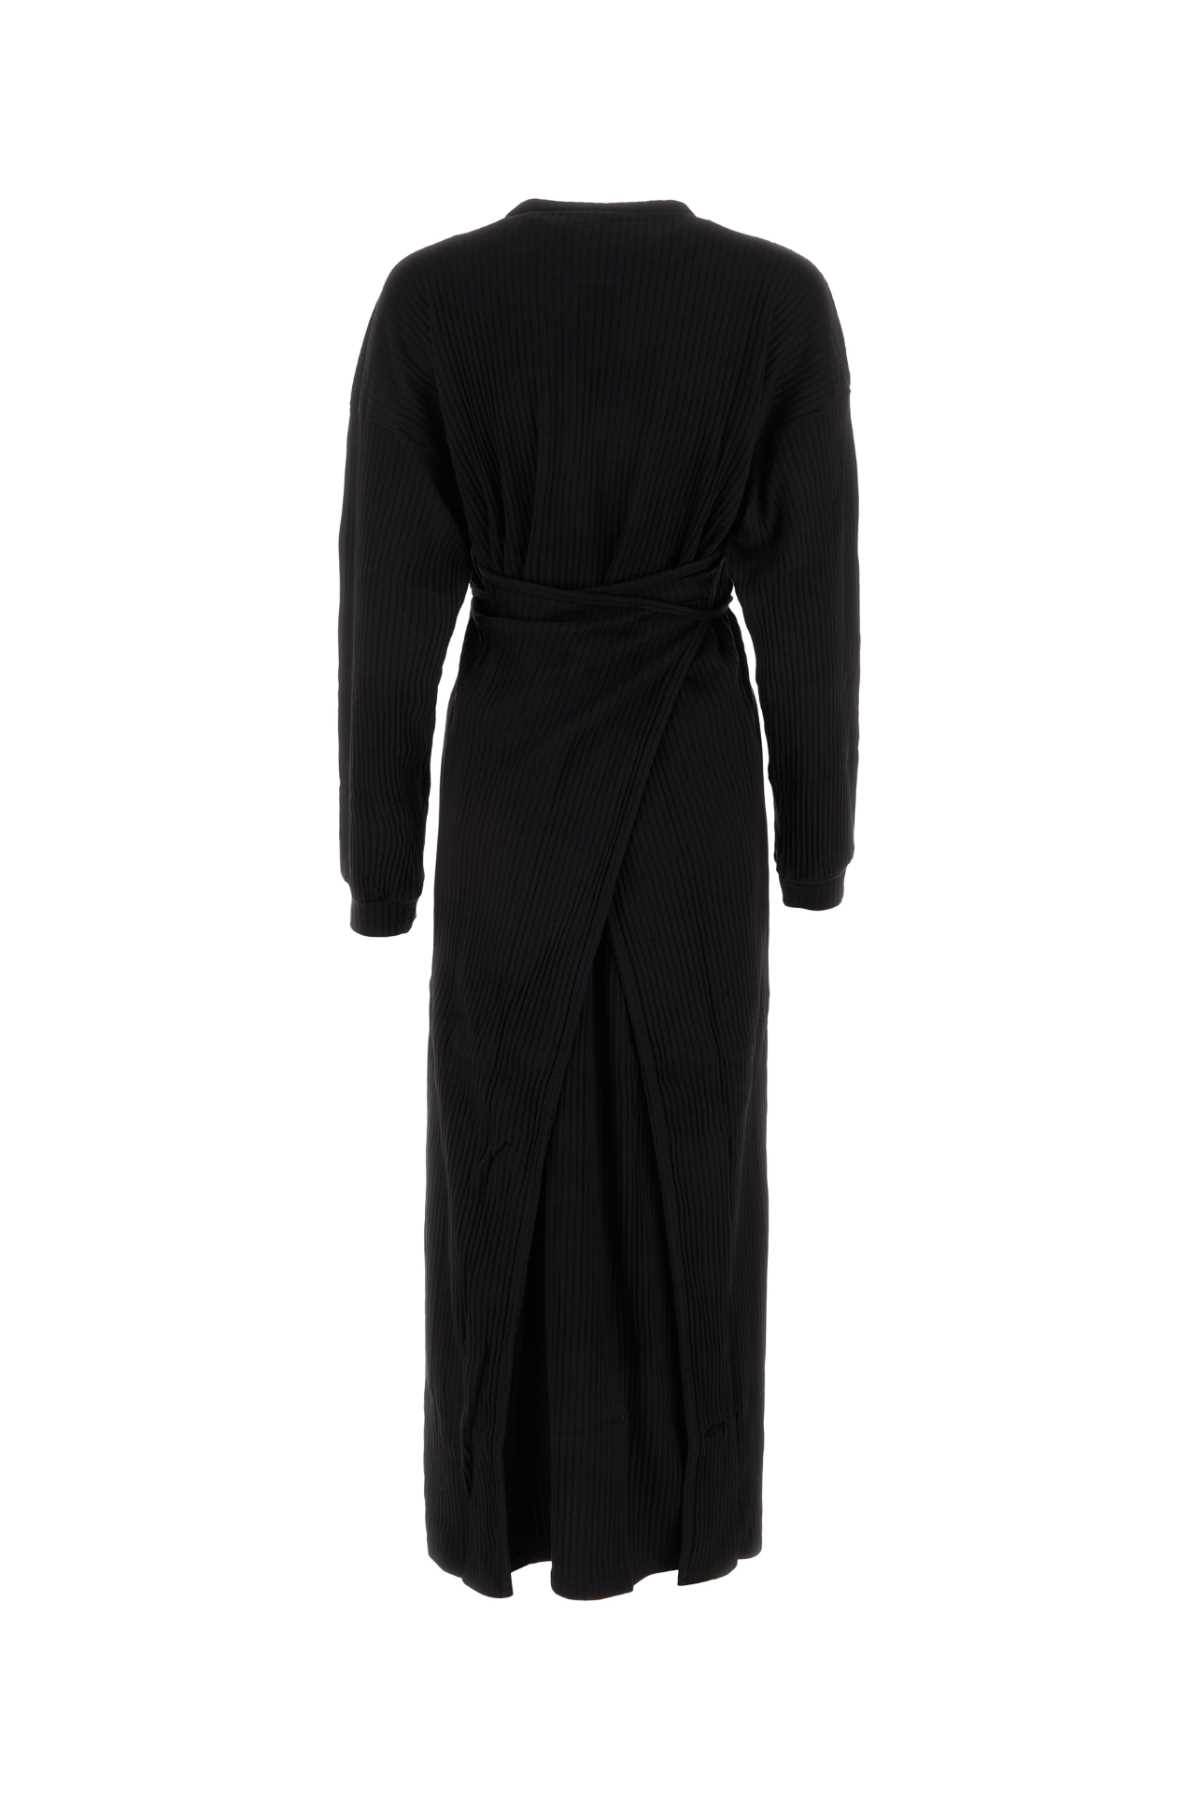 Shop Baserange Black Cotton Dress